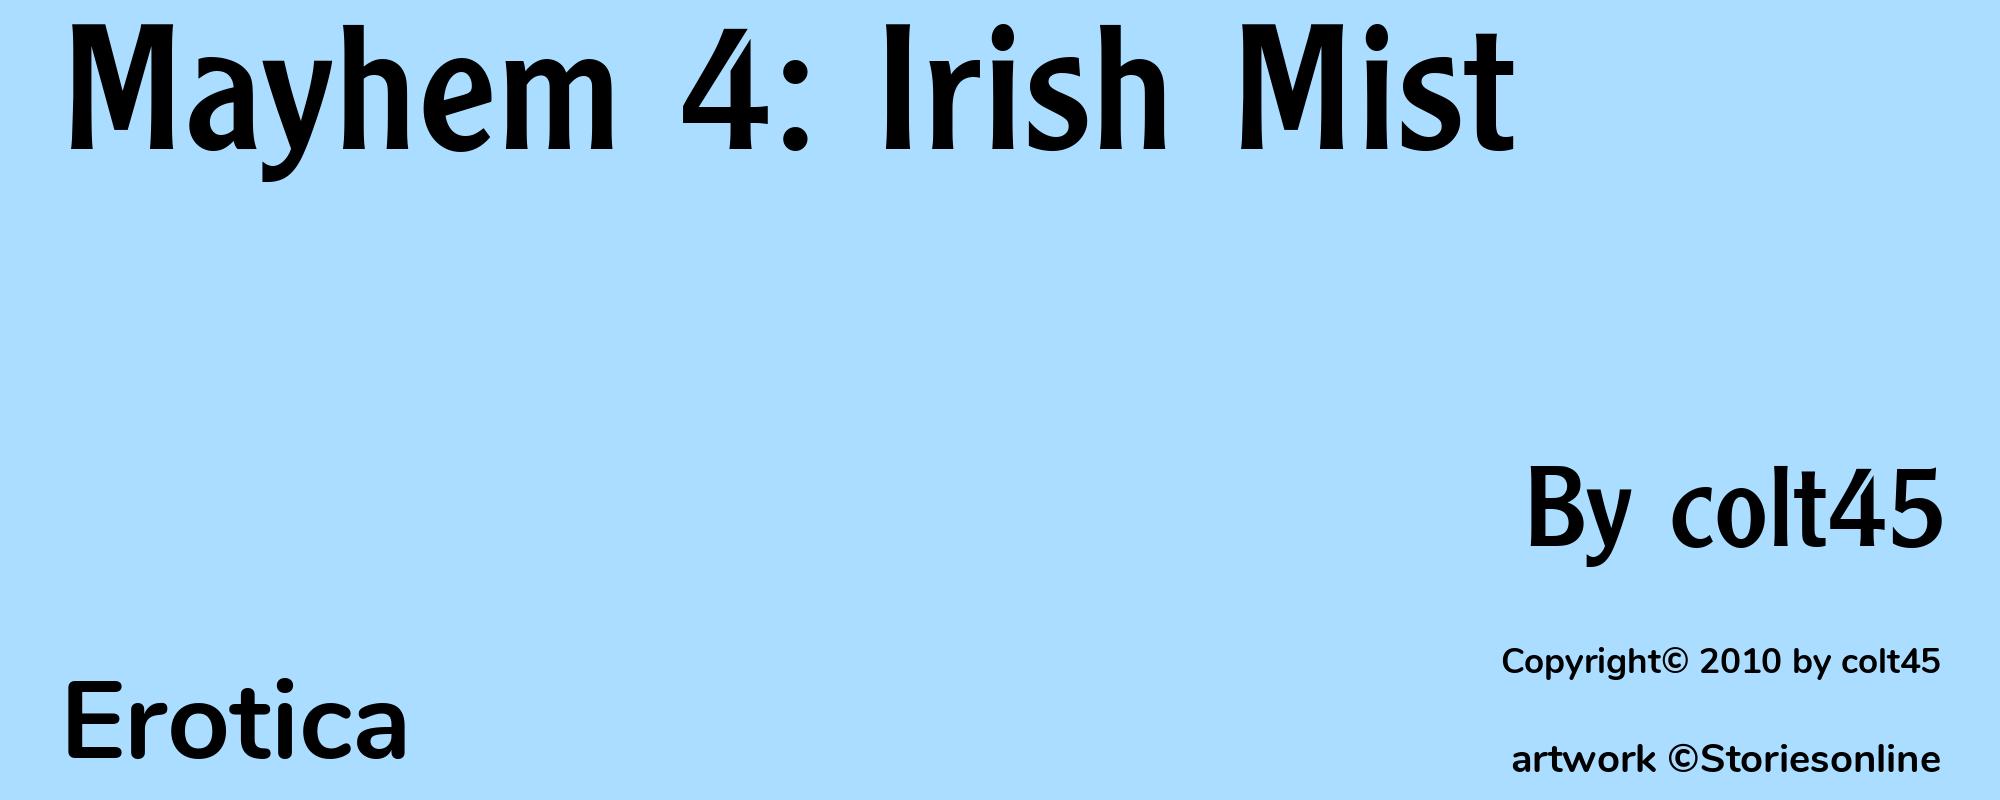 Mayhem 4: Irish Mist - Cover